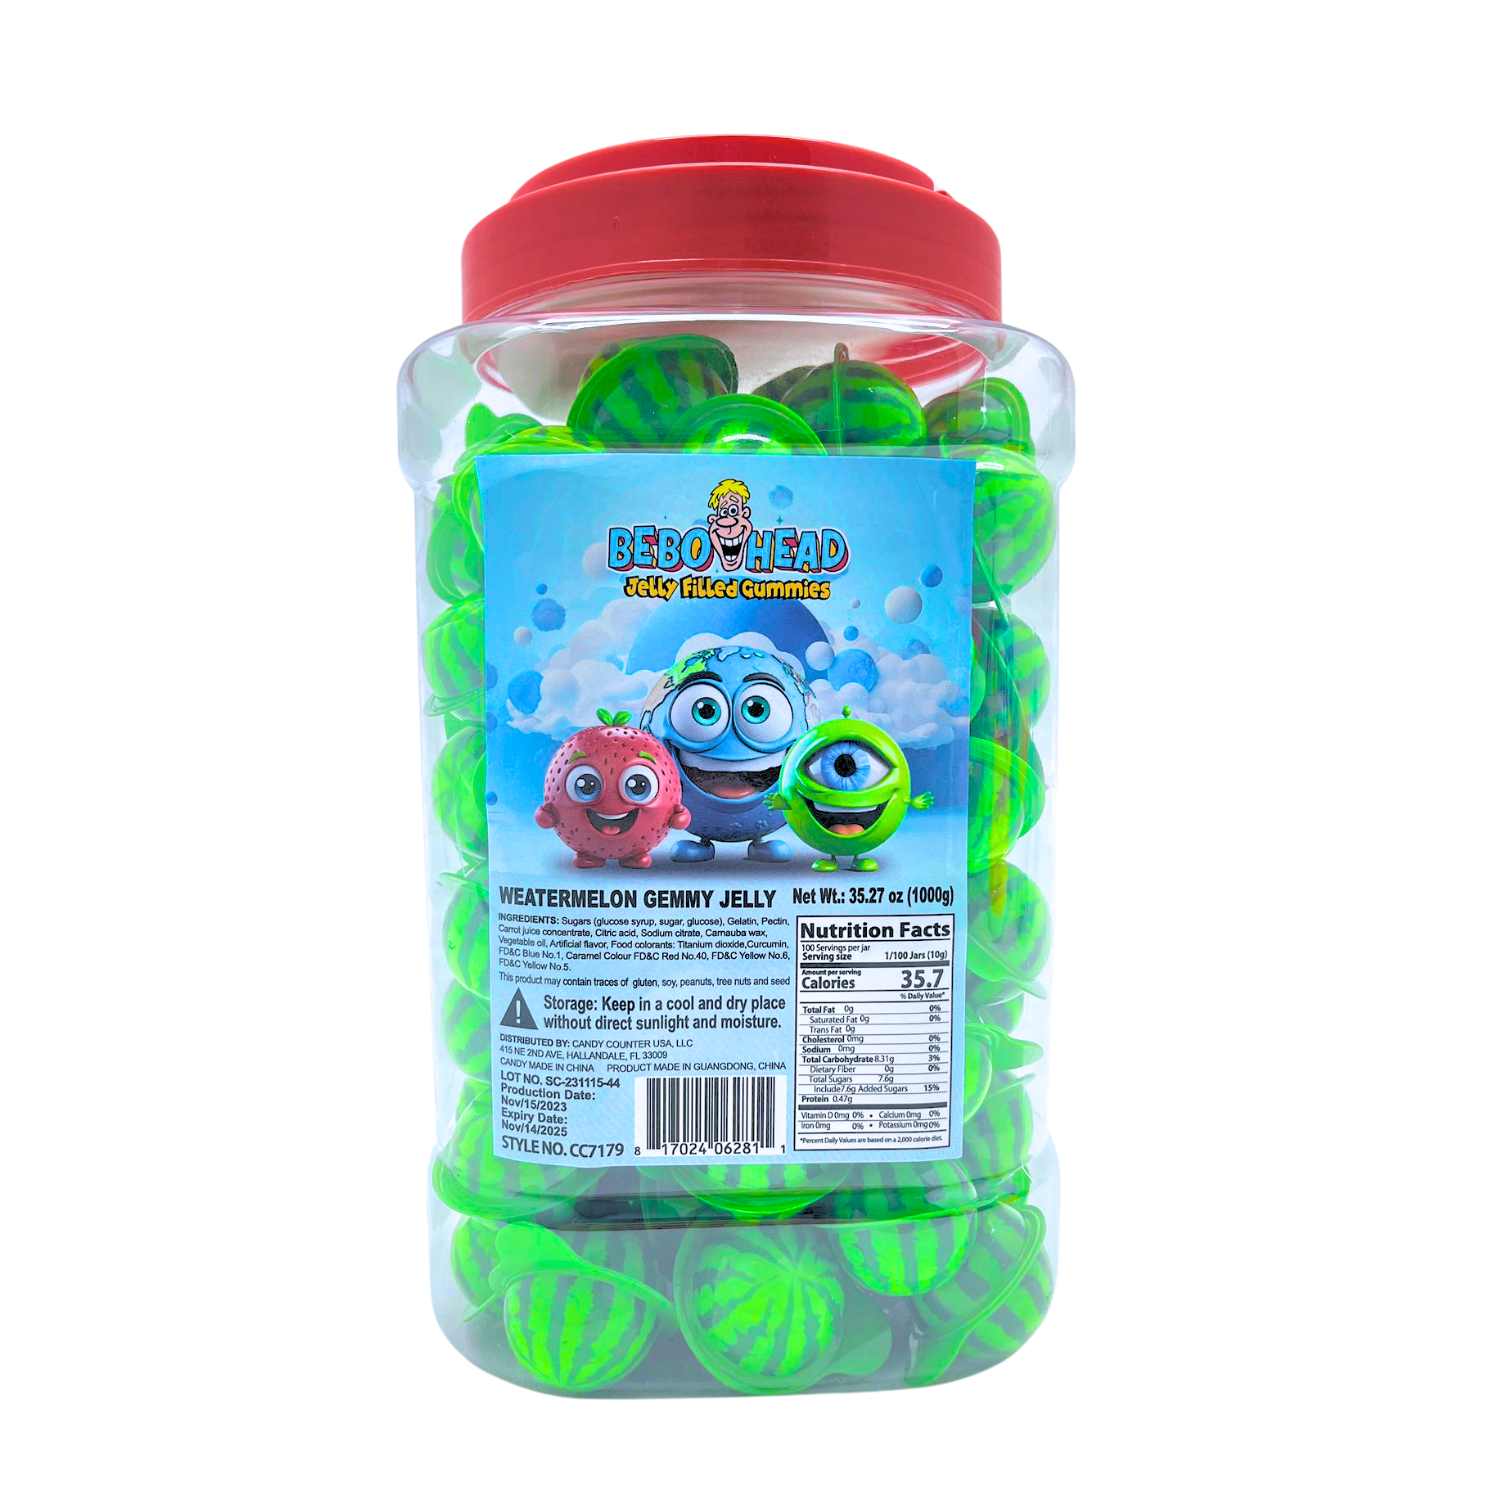 Watermelon Gummy Jelly Balls - 2.2 Pounds